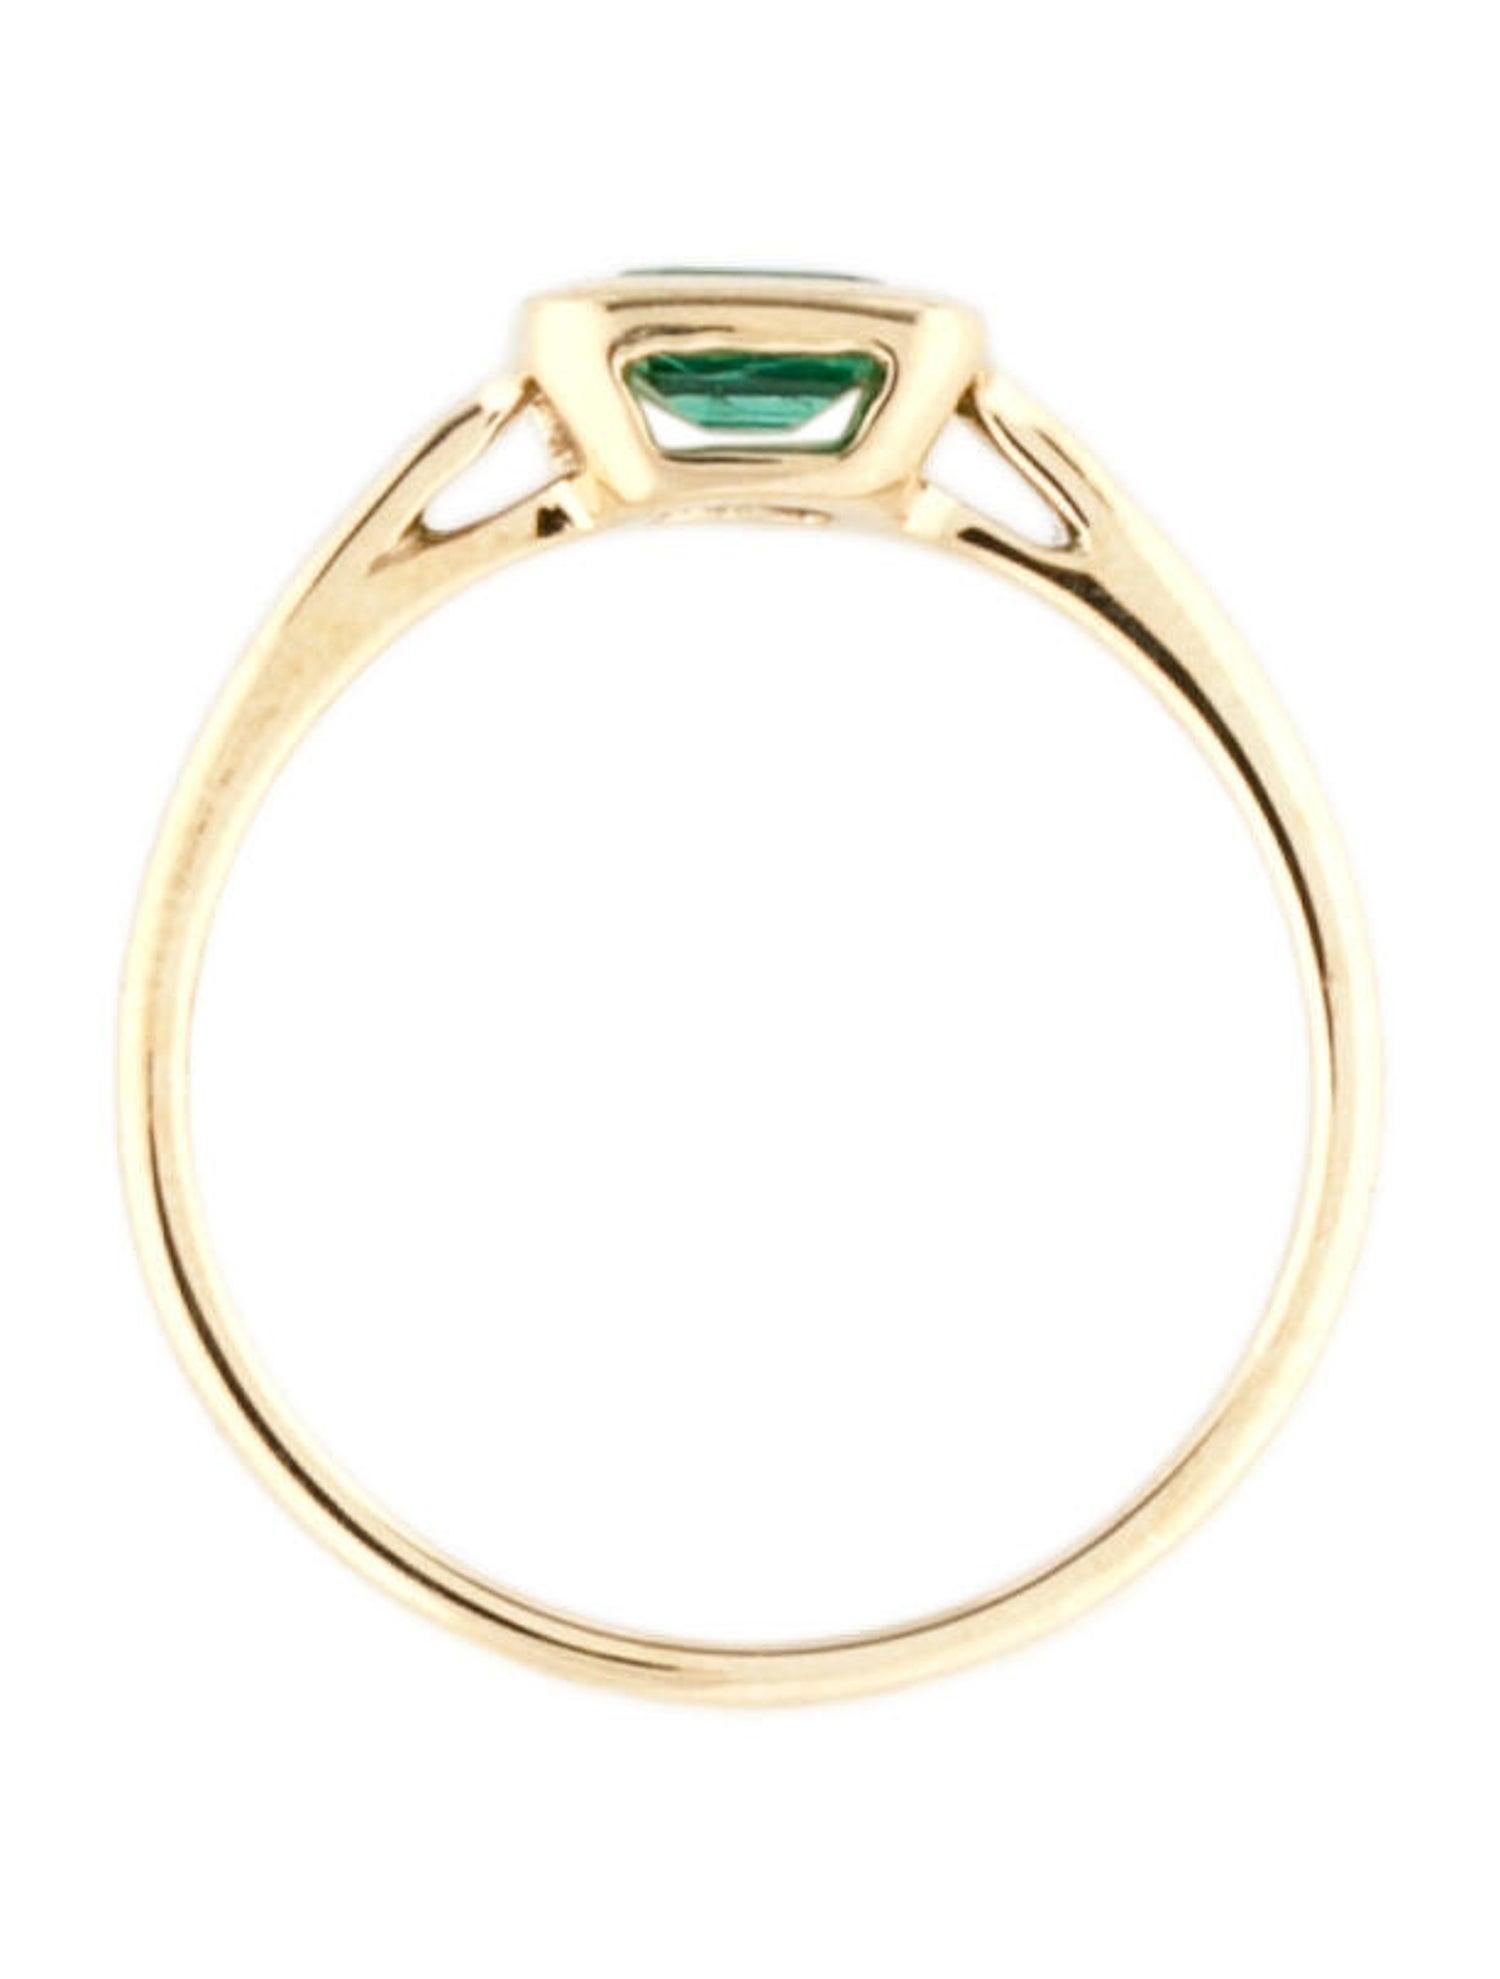 Women's 14k Yellow Gold & Emerald-Cut Green Emerald Ring 0.60 CTTW For Sale